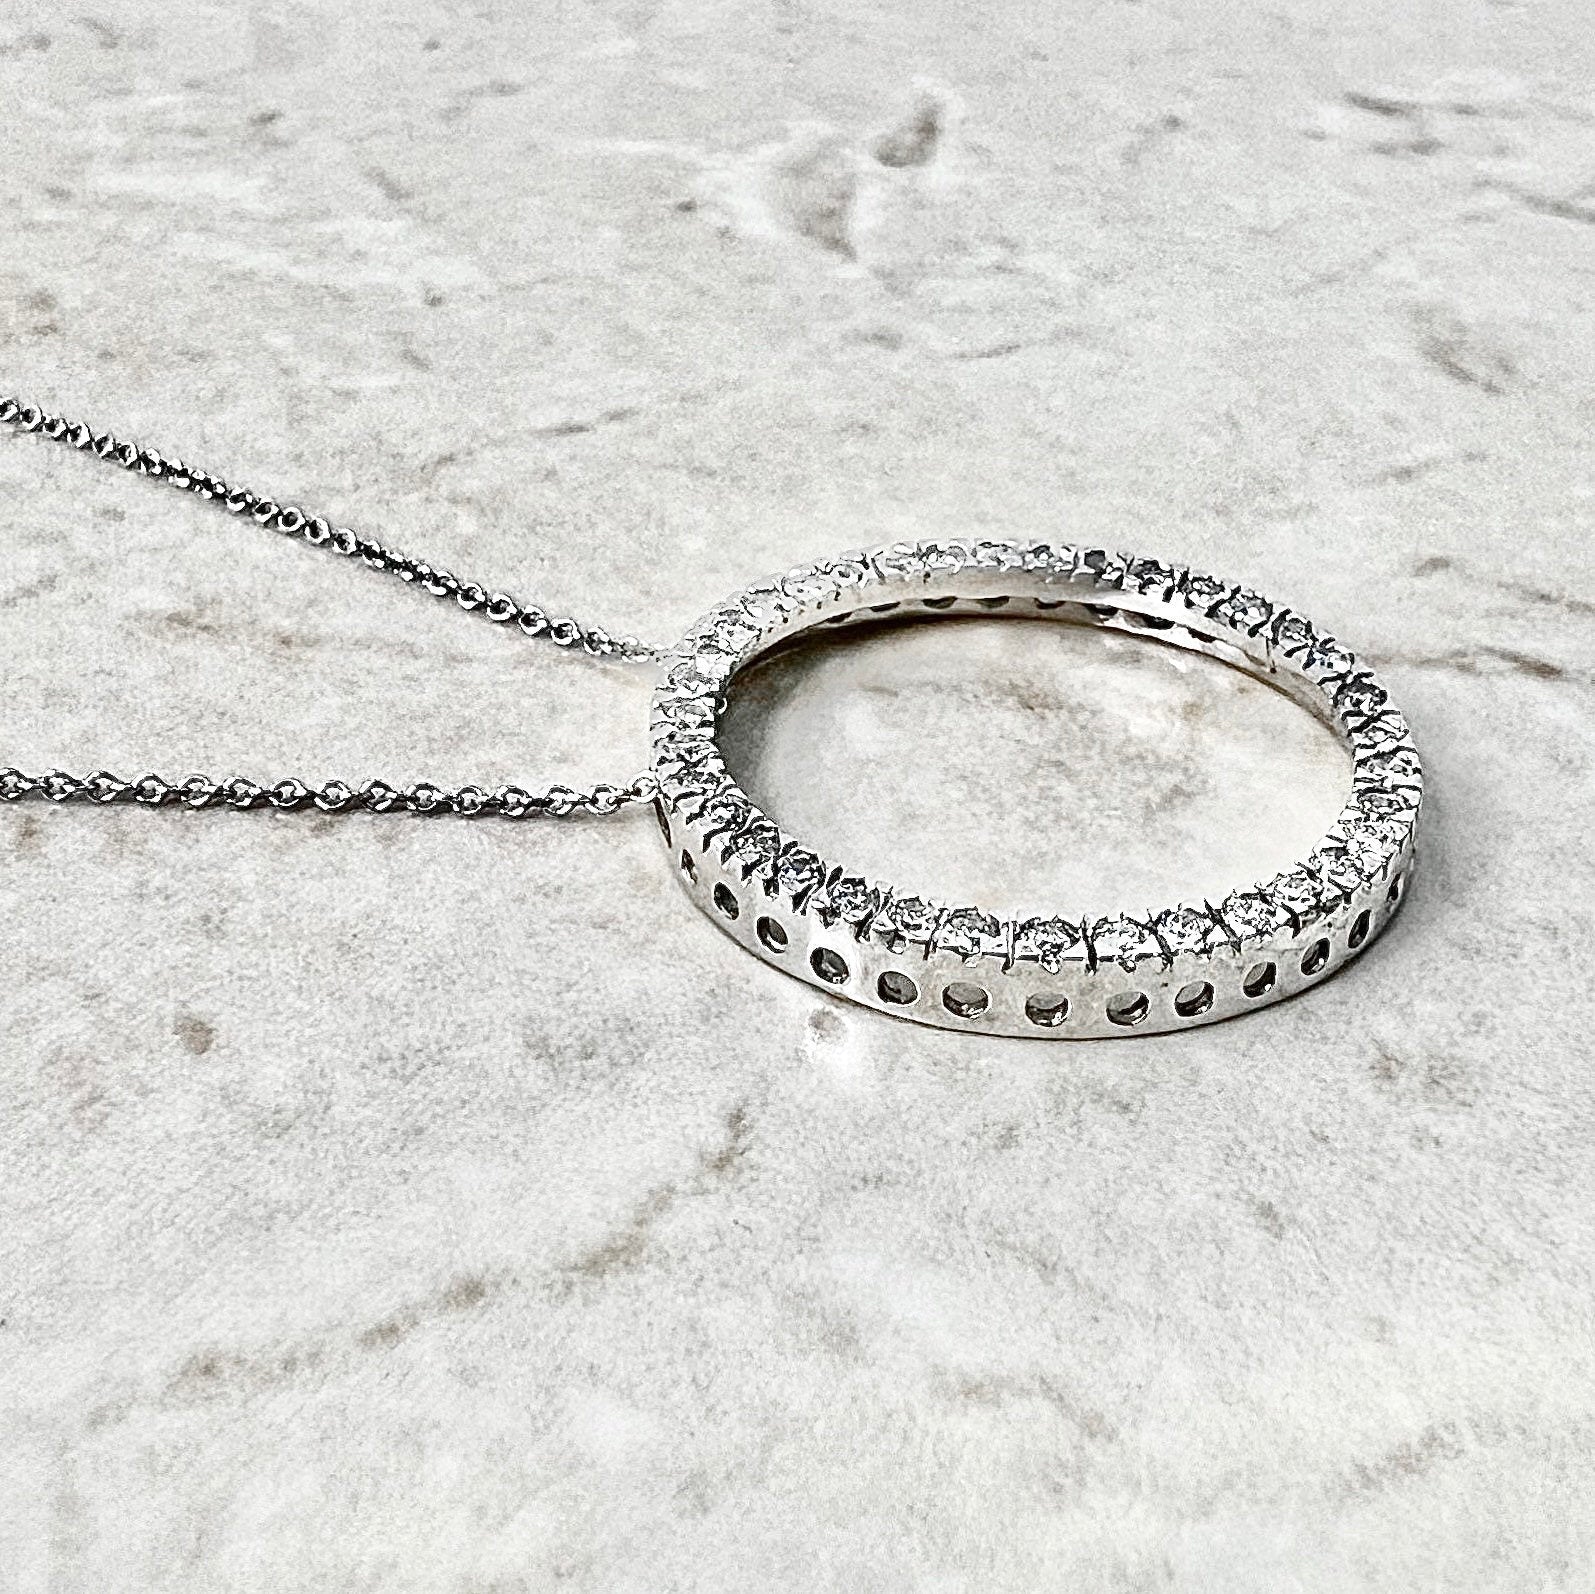 14K Diamond Circle Pendant Necklace 0.45 CT - White Gold Diamond Necklace - Circle Diamond Pendant - Circle Necklace - Diamond Halo Necklace